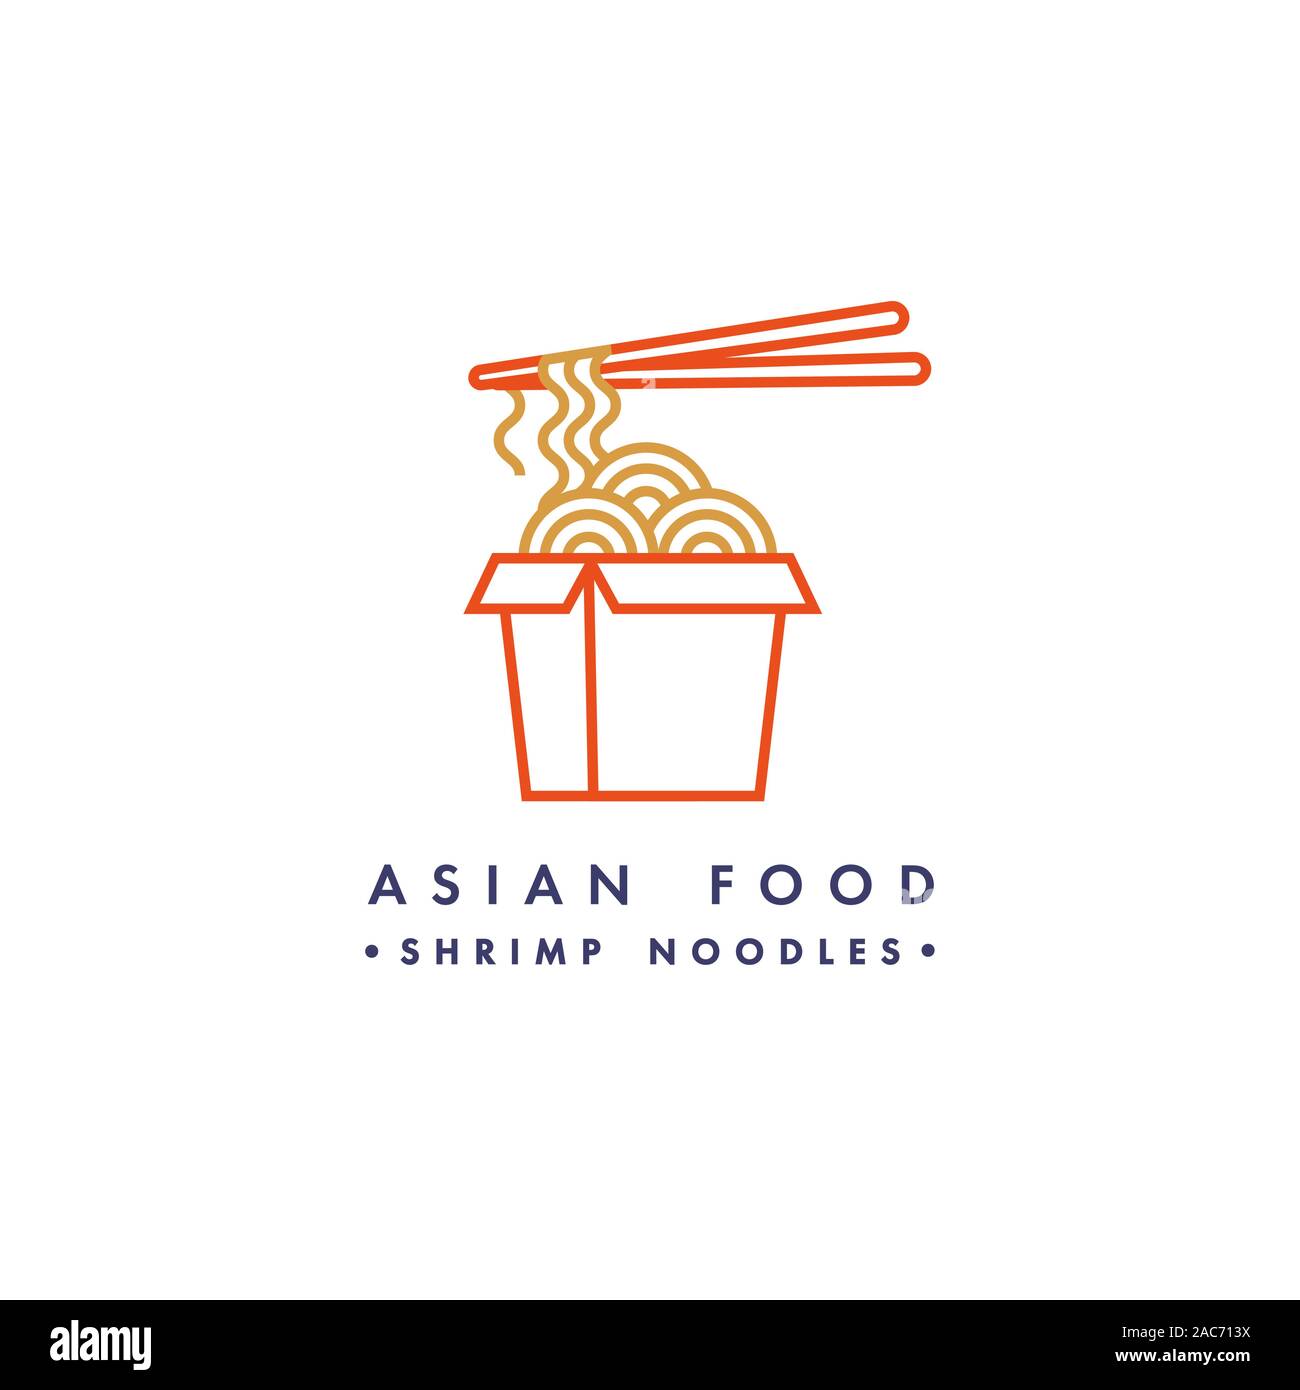 Vektor Logo Design Template und Emblem oder Logo. Asiatische Küche - Nudeln. Lineare Logos. Stock Vektor